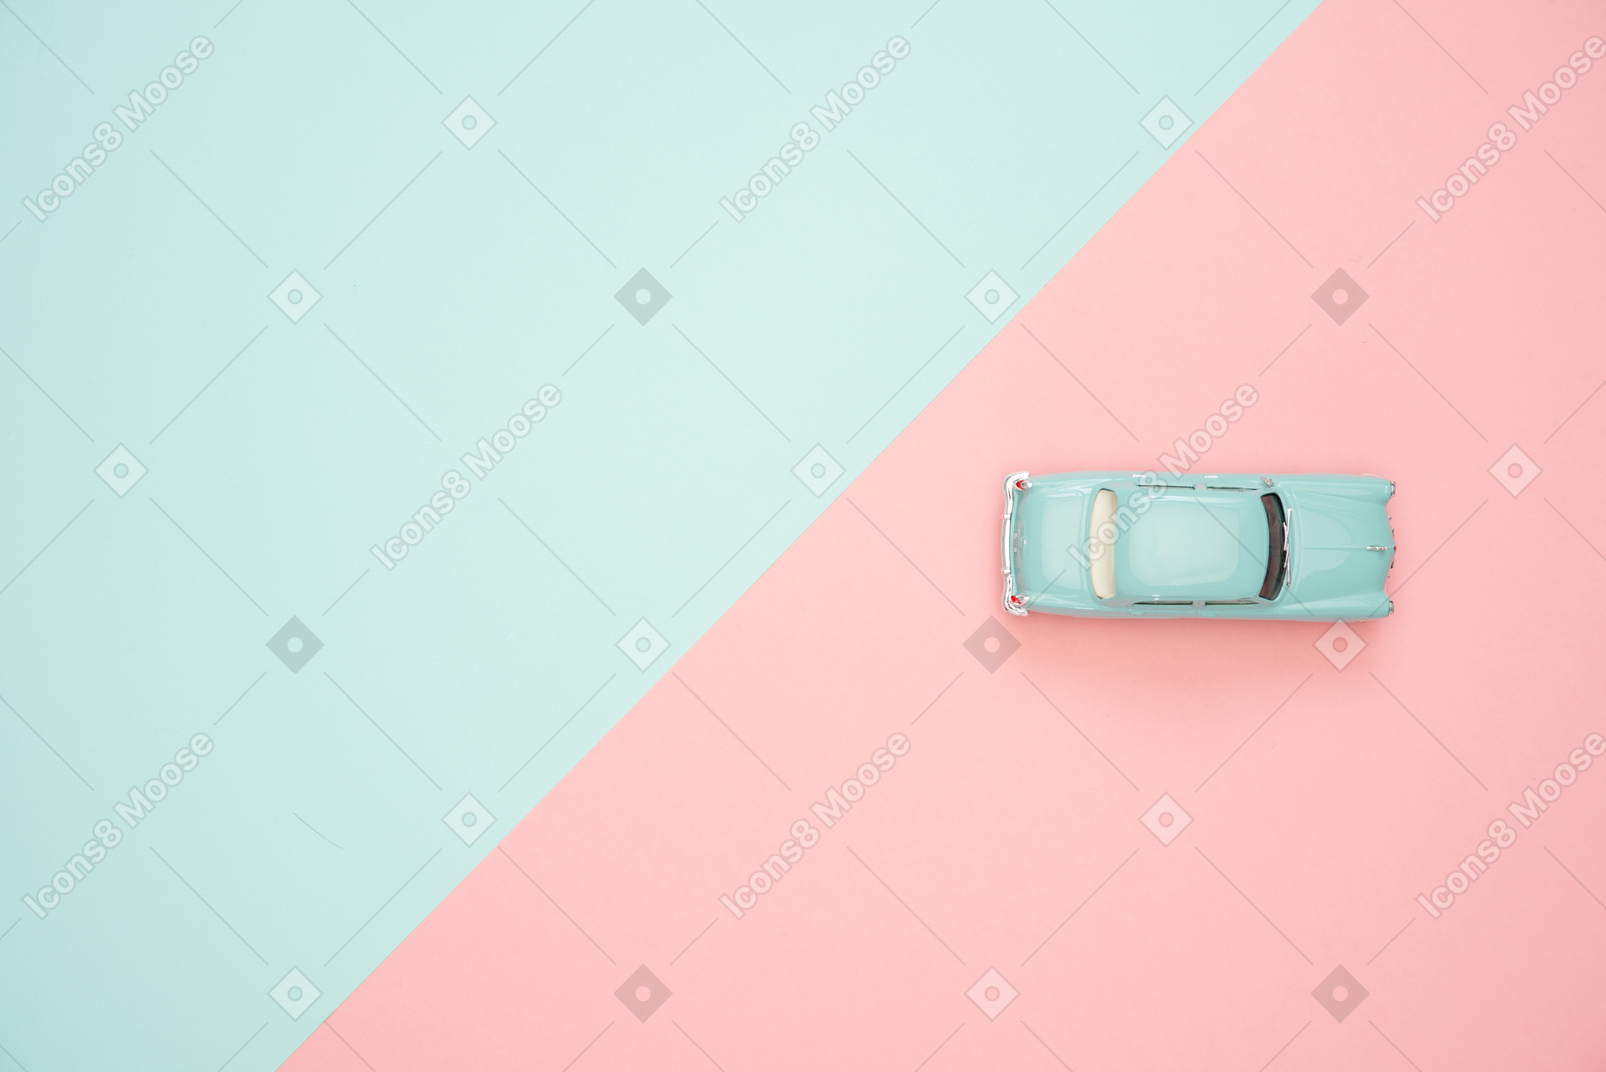 Carro de juguete azul